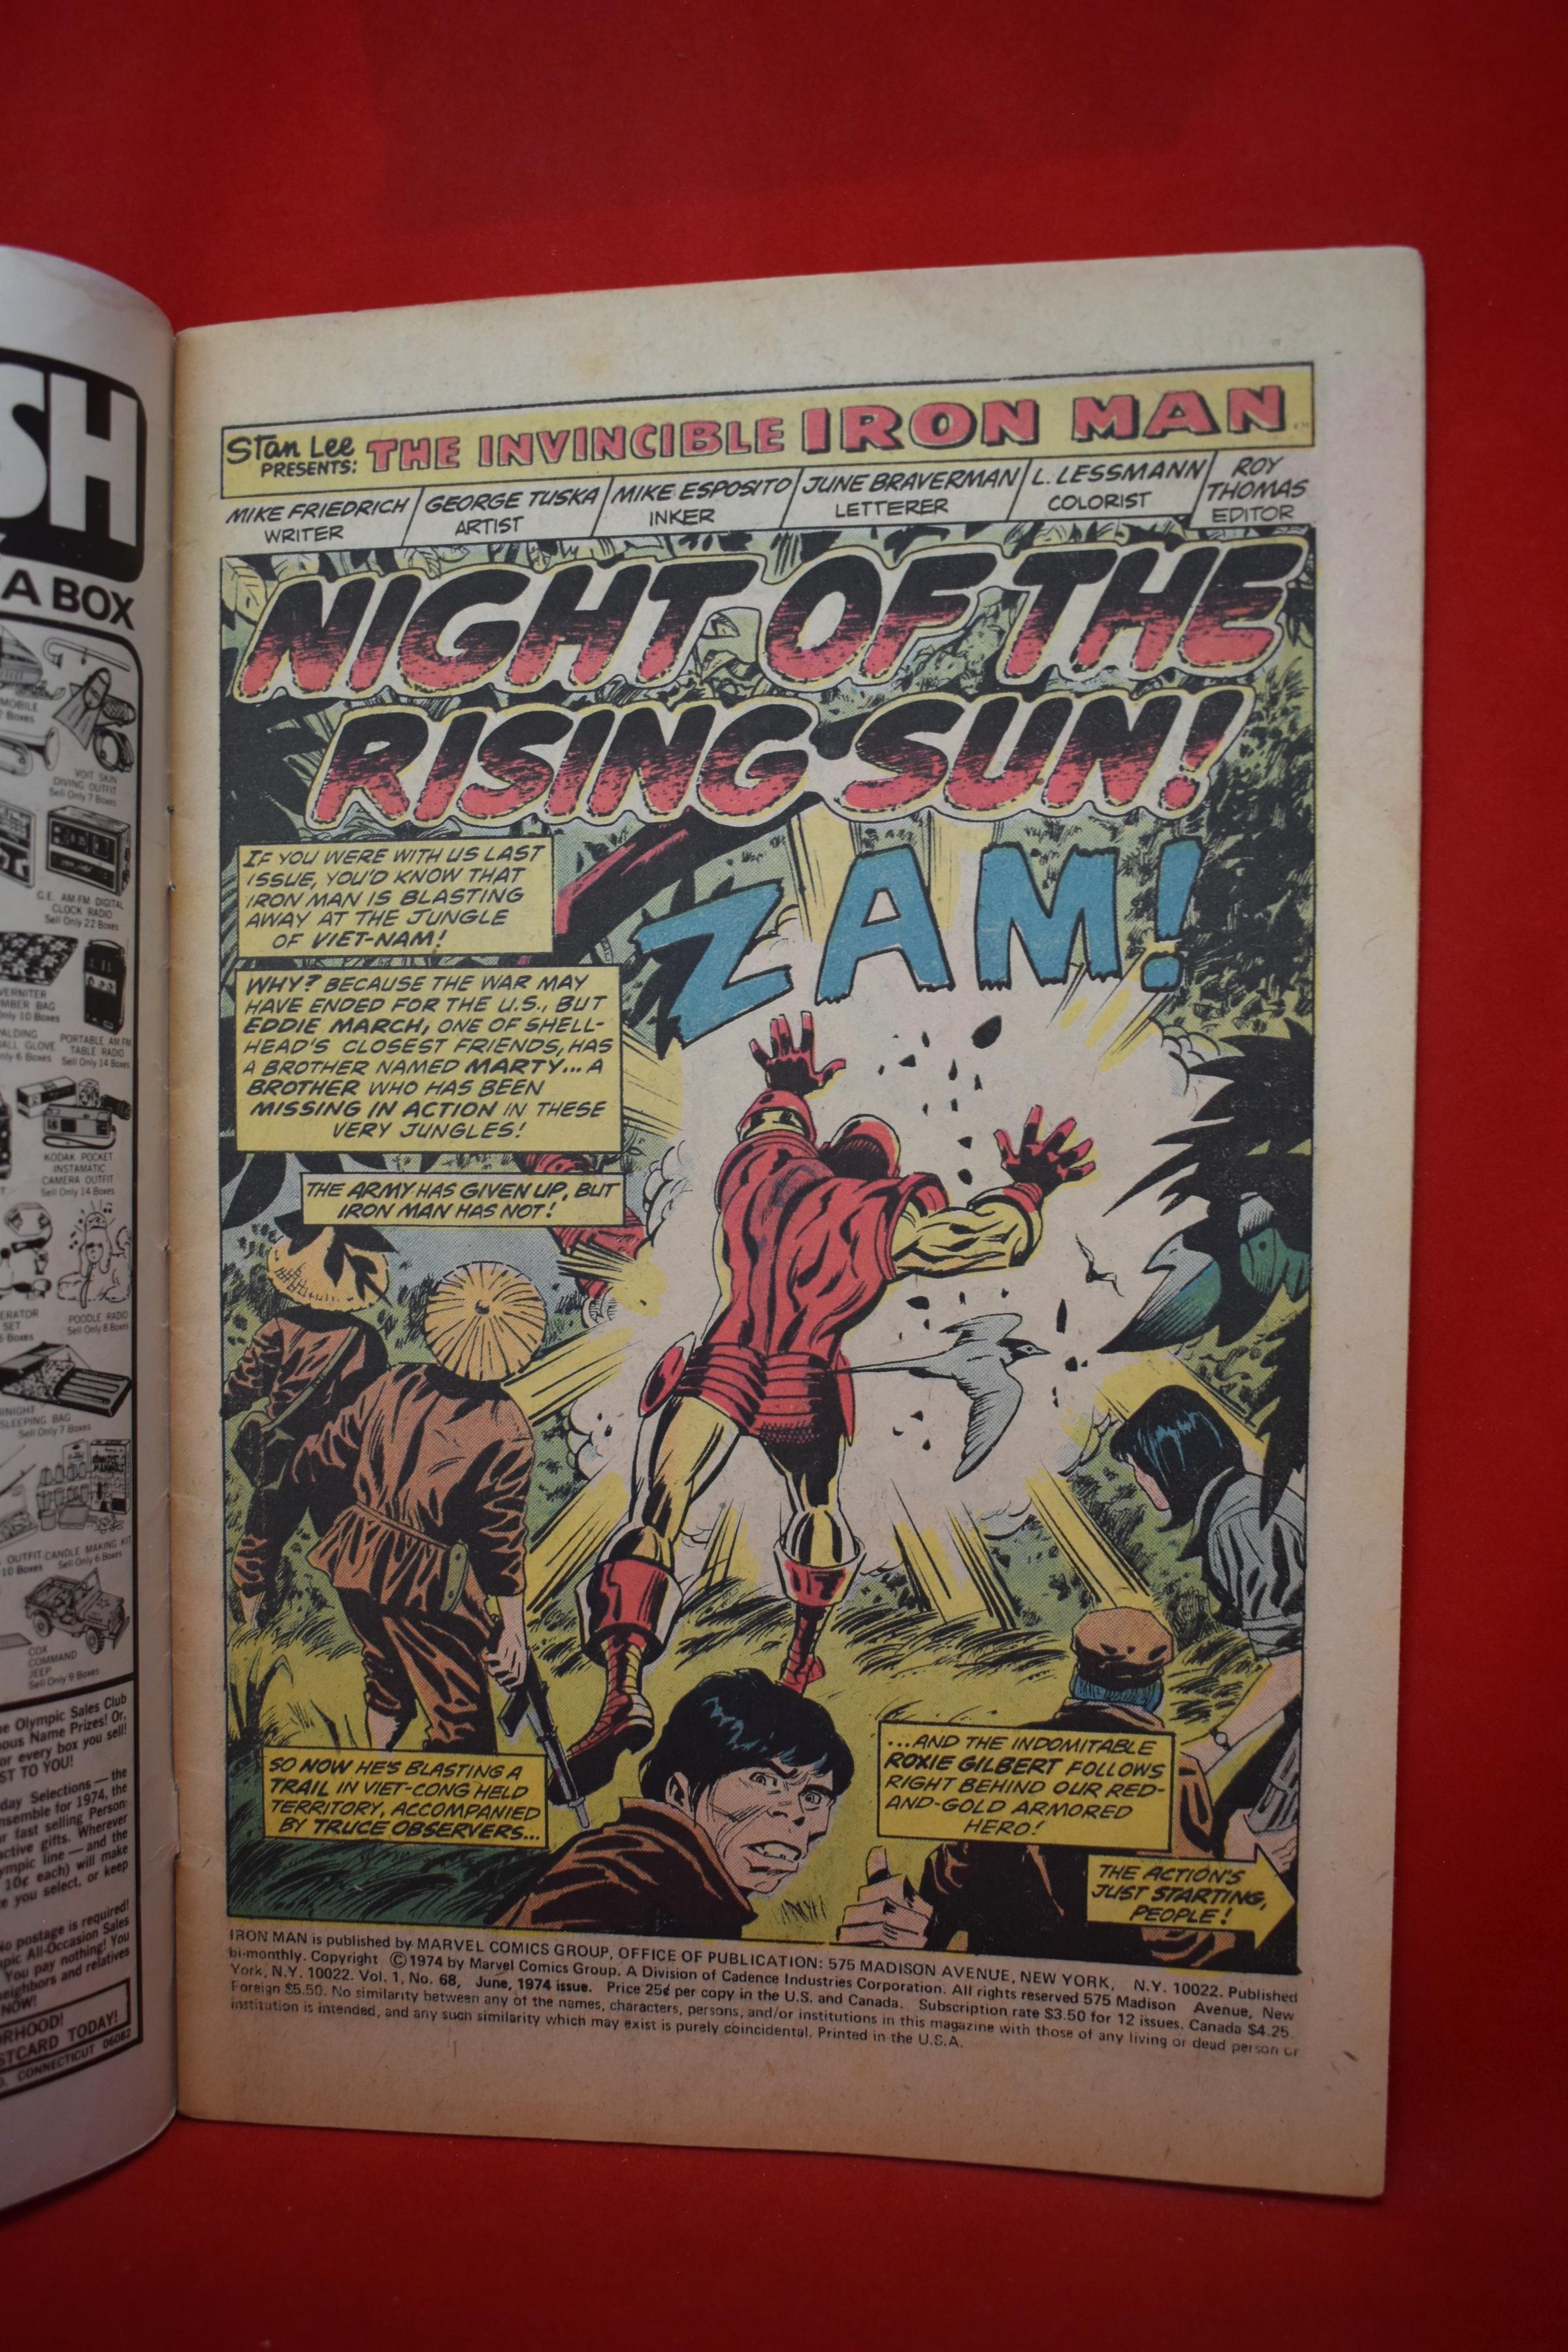 IRON MAN #68 | NIGHT OF THE RISING SUN! | JIM STARLIN - 1974